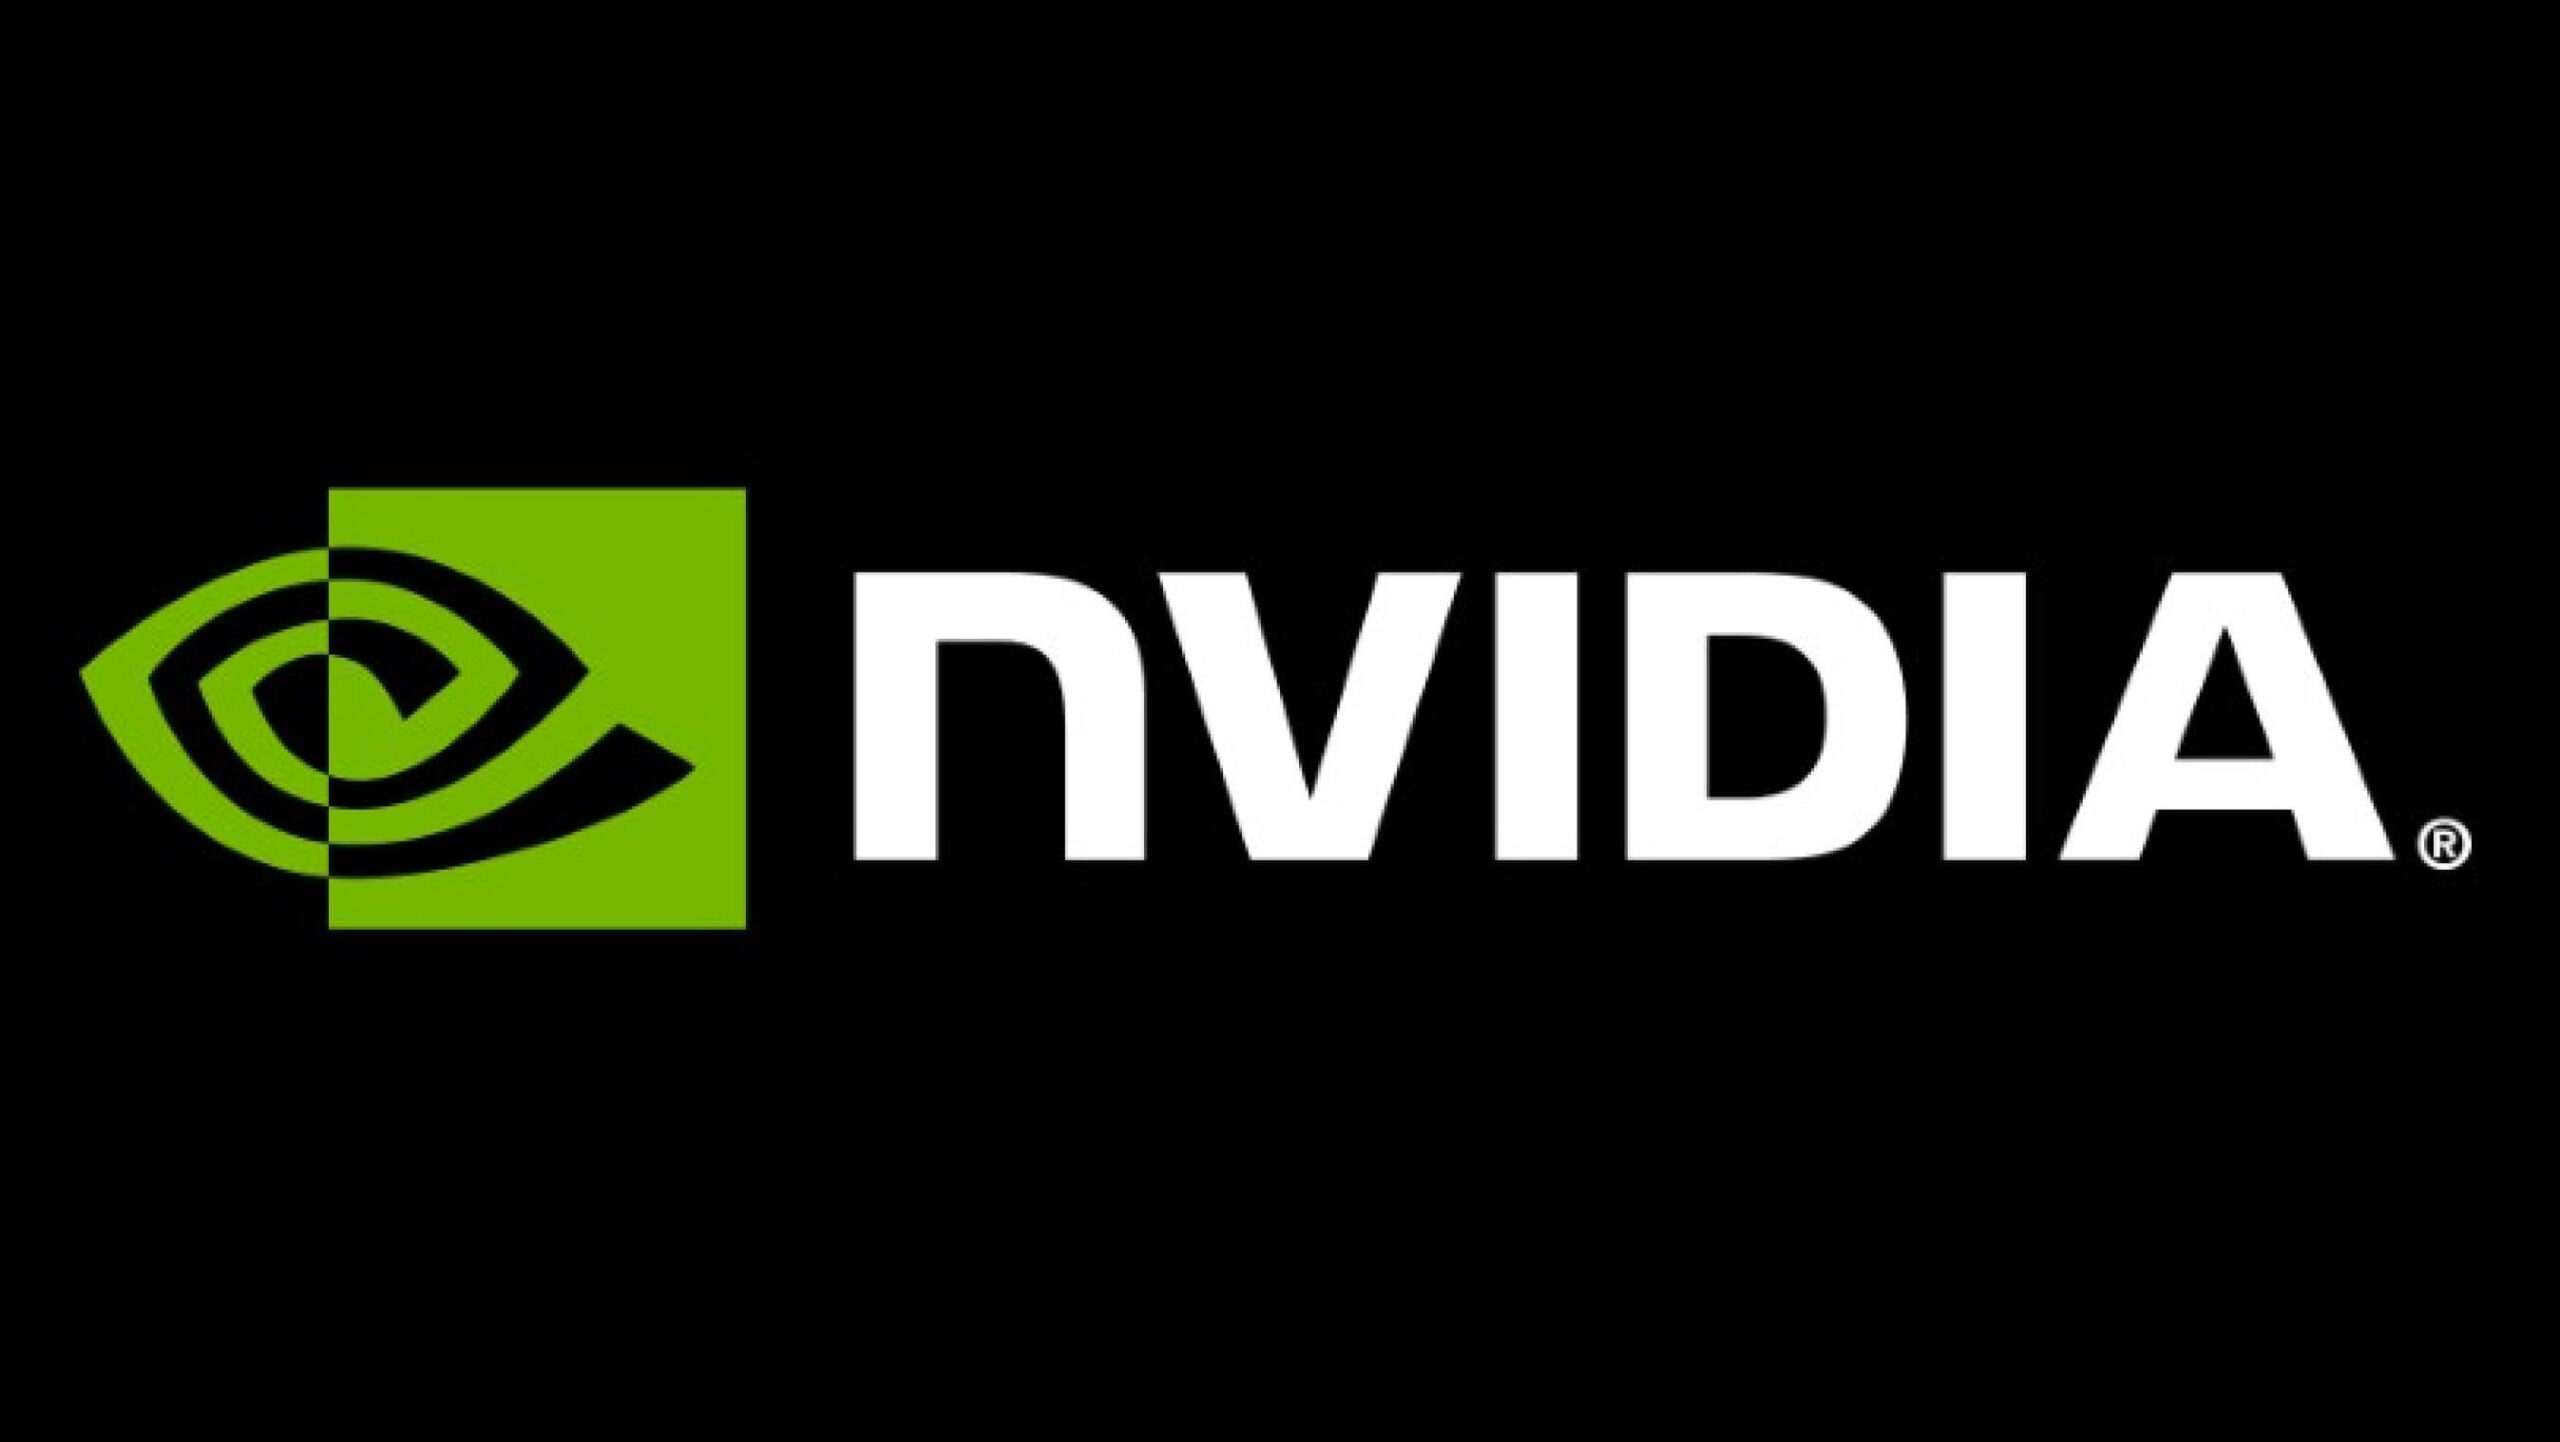  nvidia control panel access denied